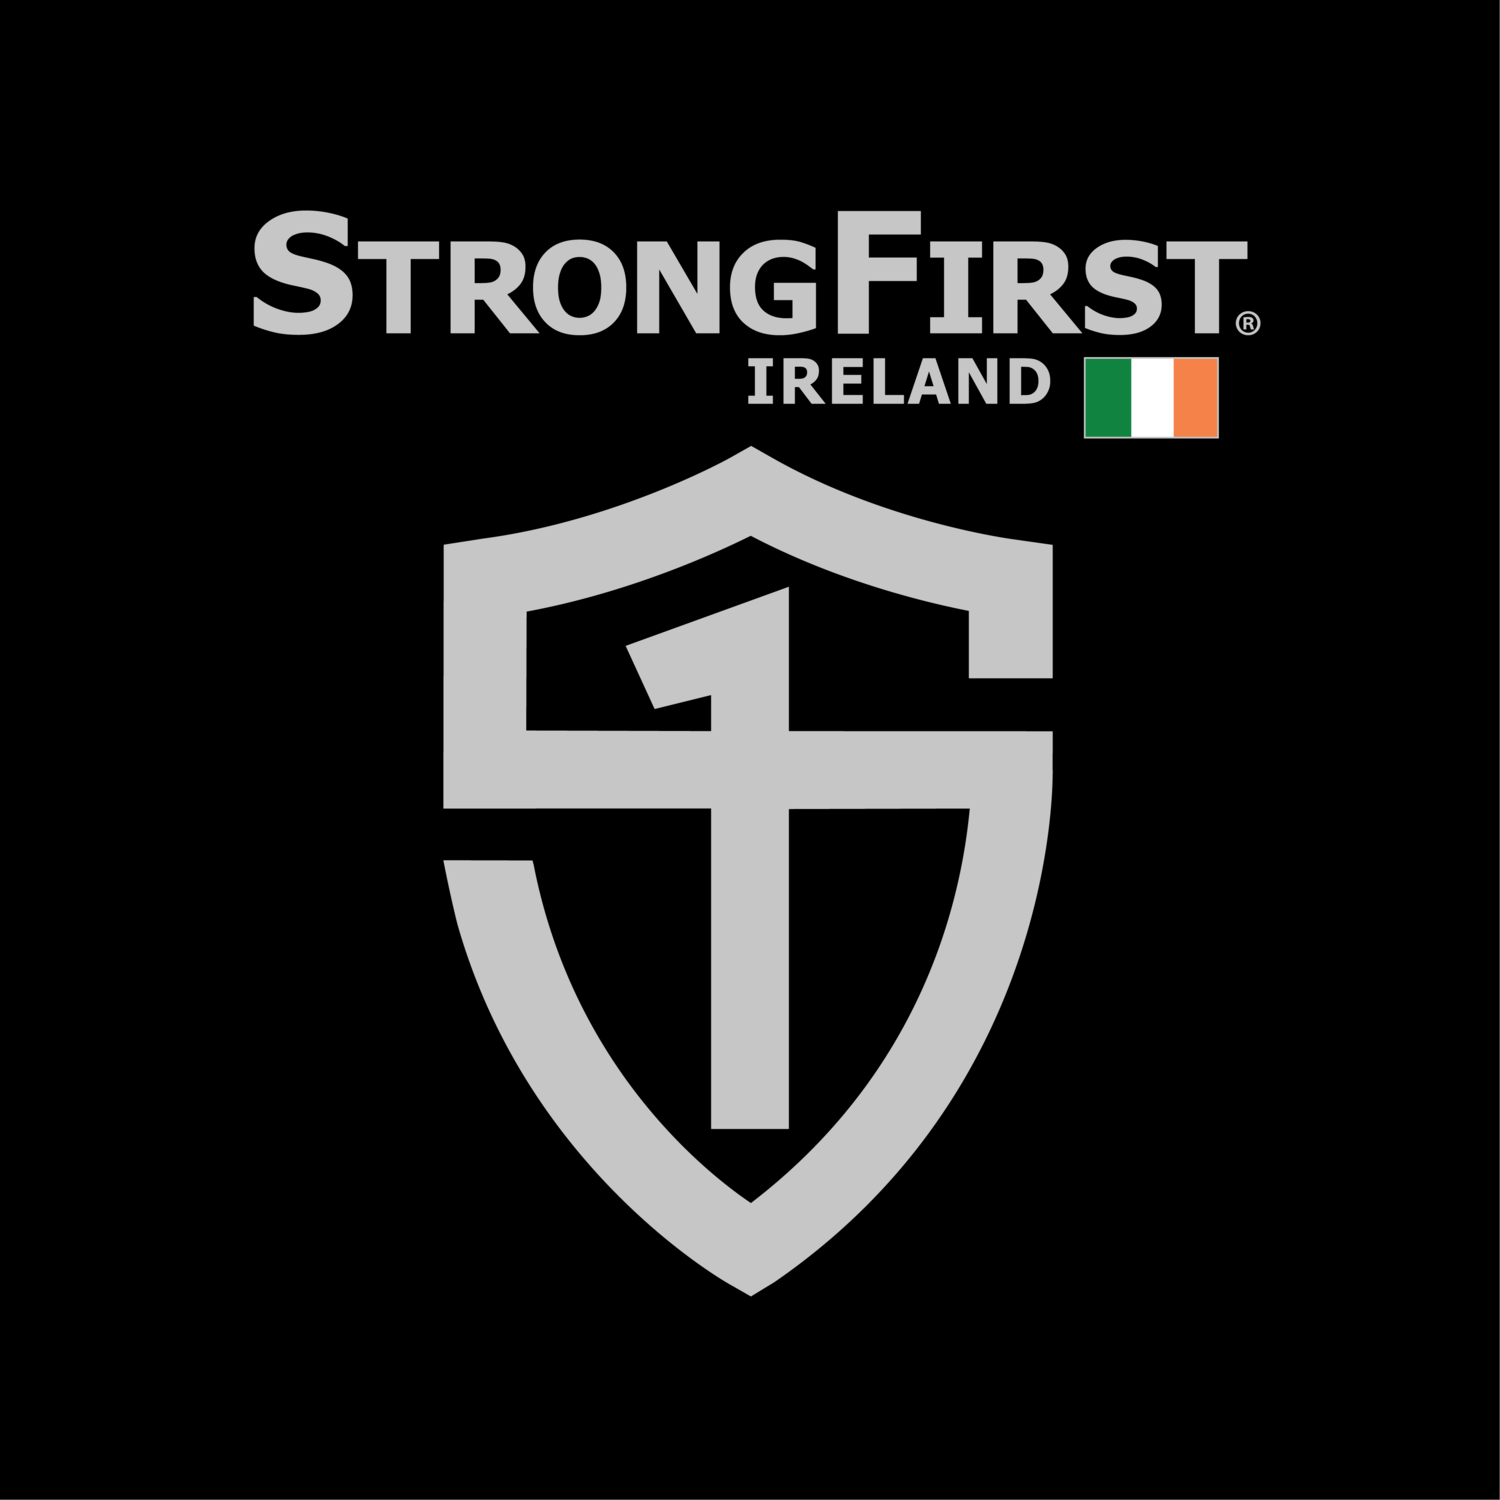 StrongFirst Ireland